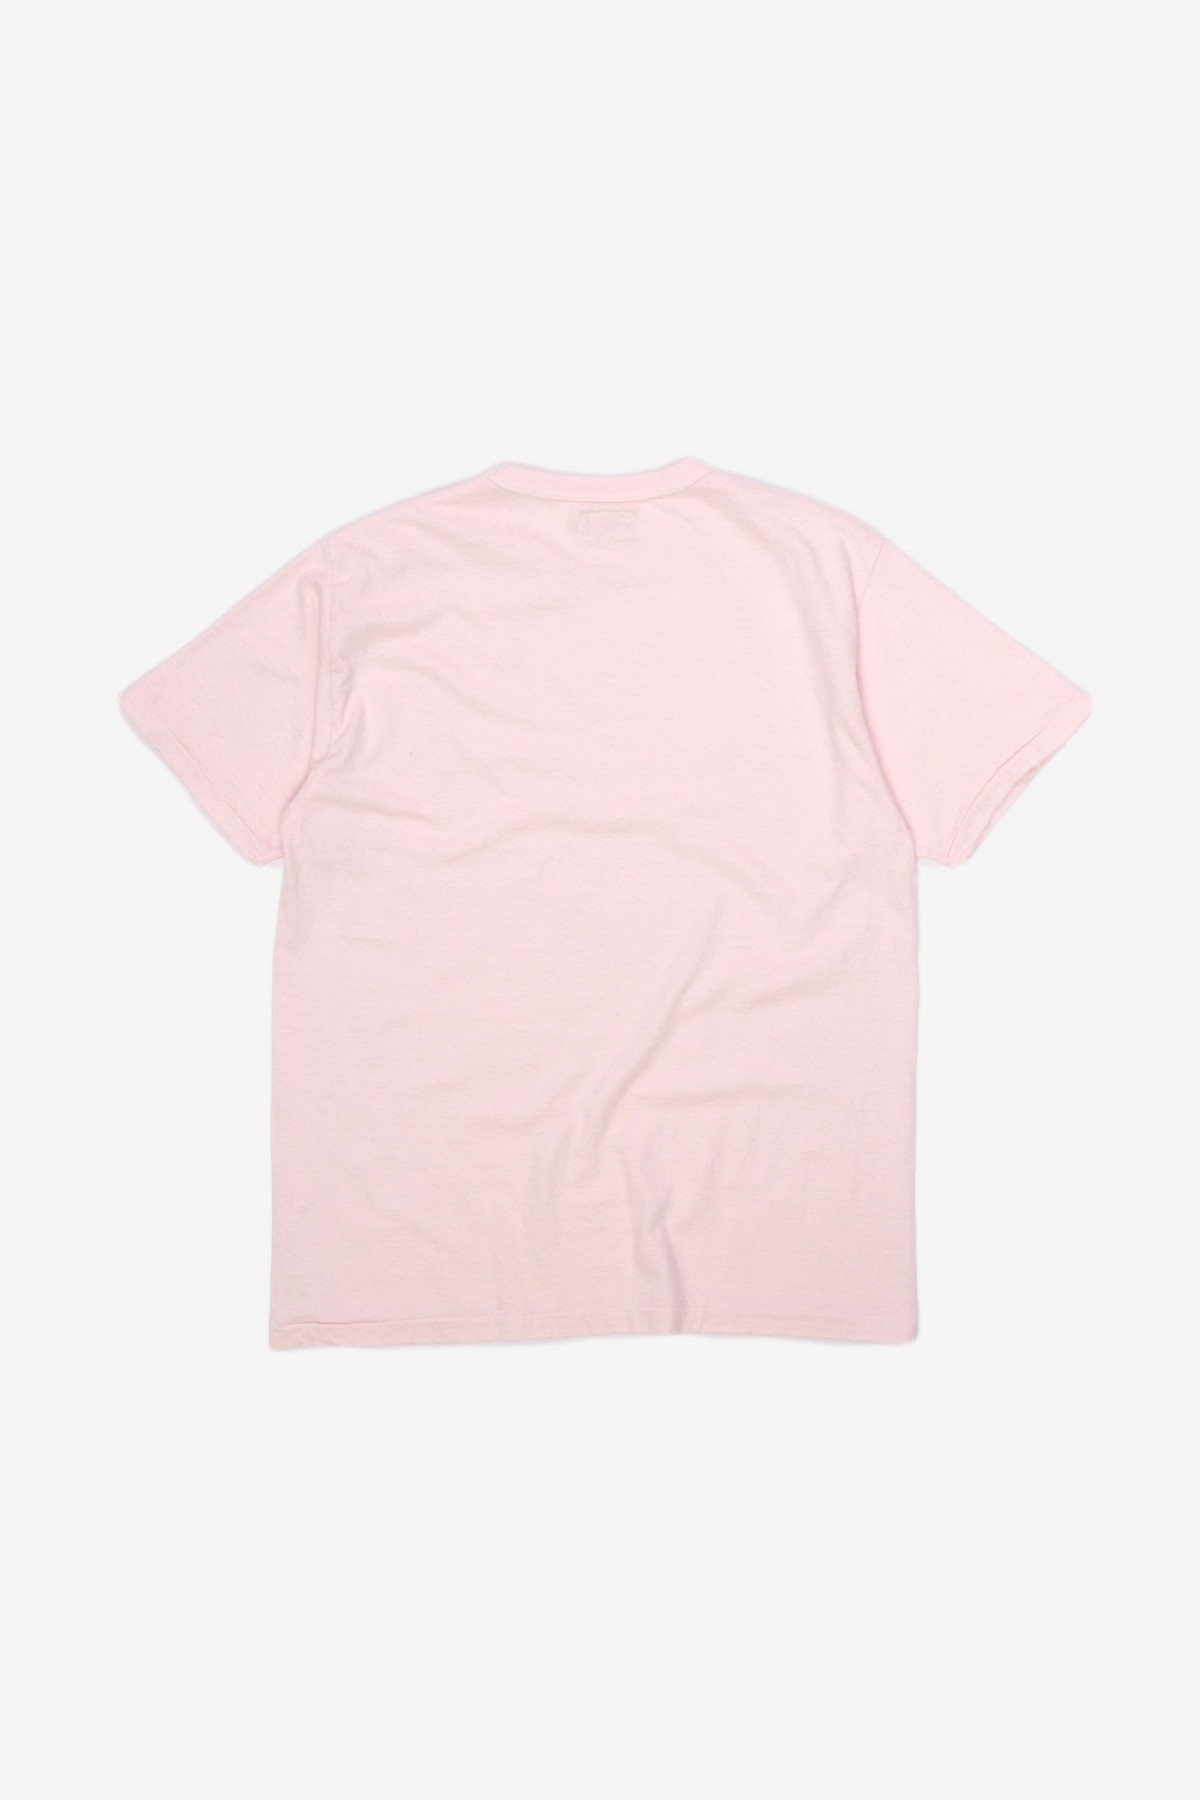 Sunray Sportswear Haleiwa Short Sleeve T-Shirt in Barely Pink